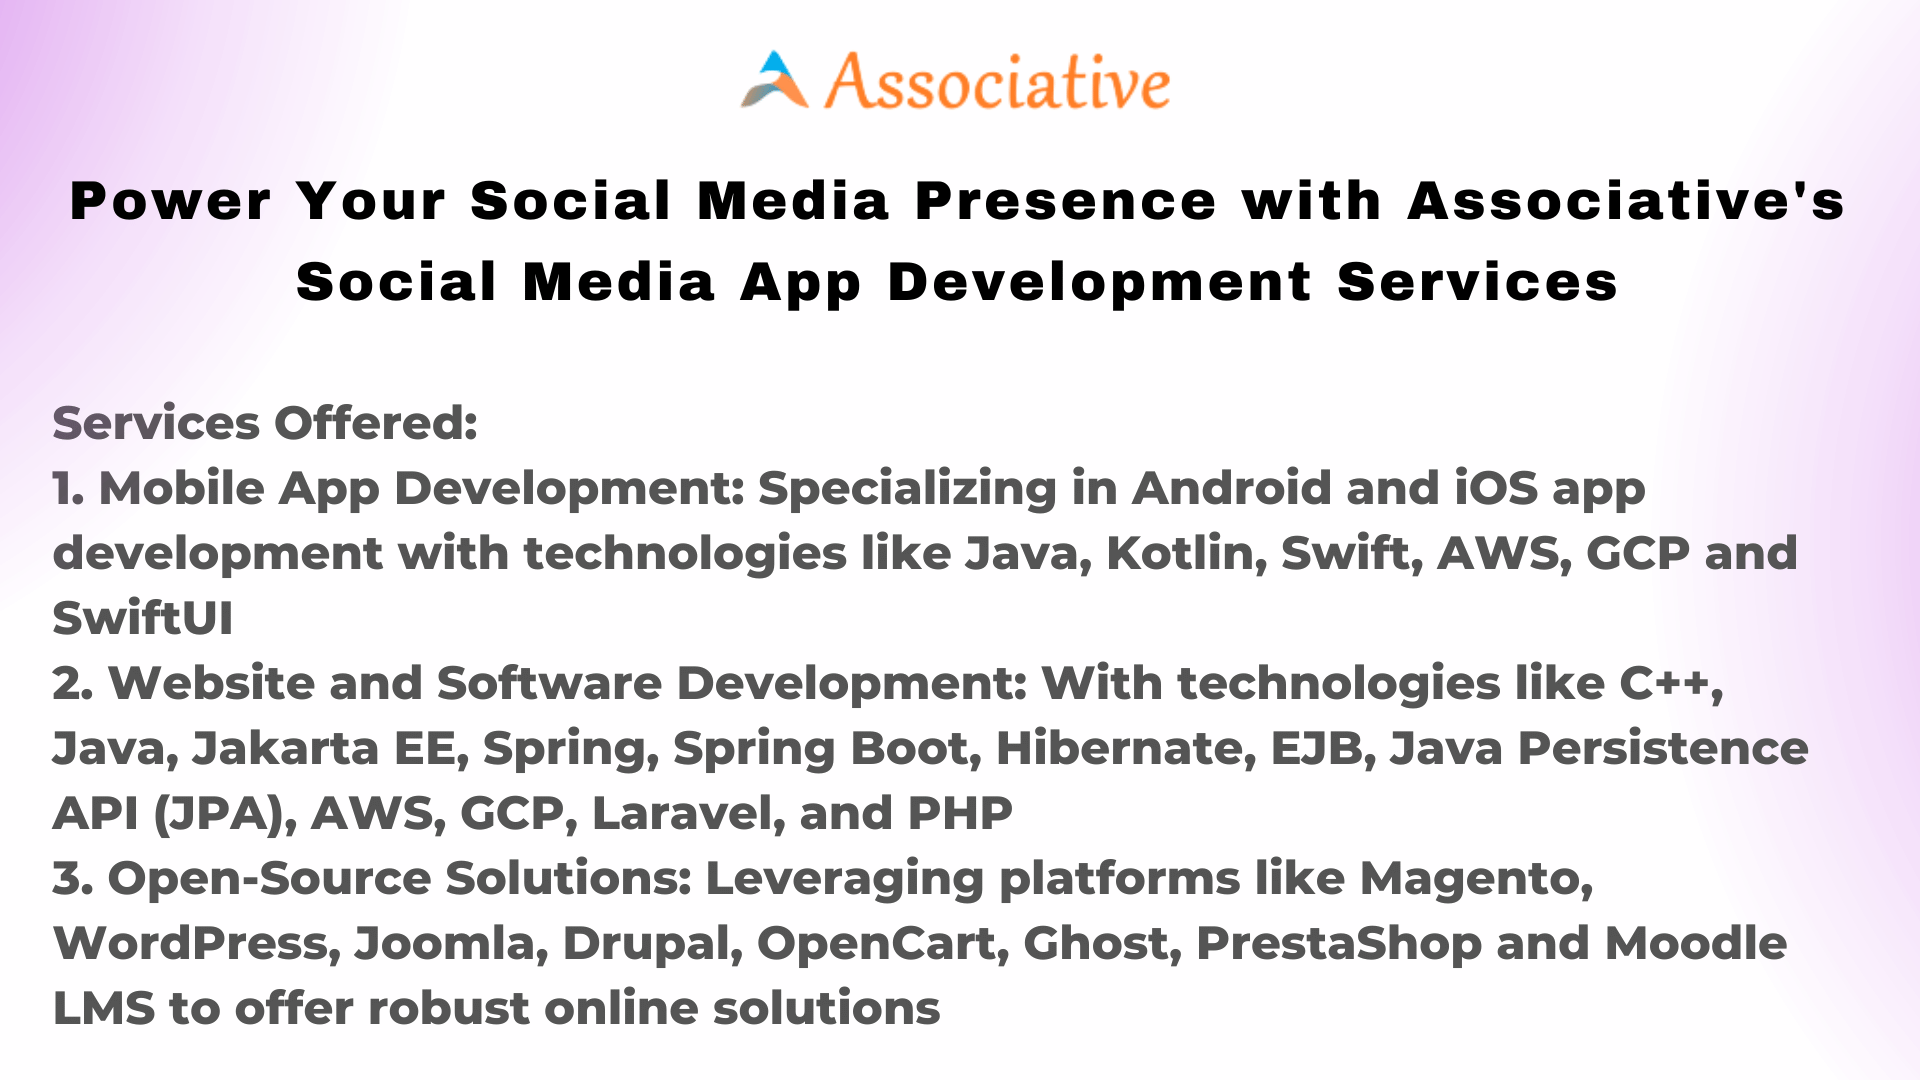 Power Your Social Media Presence with Associative's Social Media App Development Services